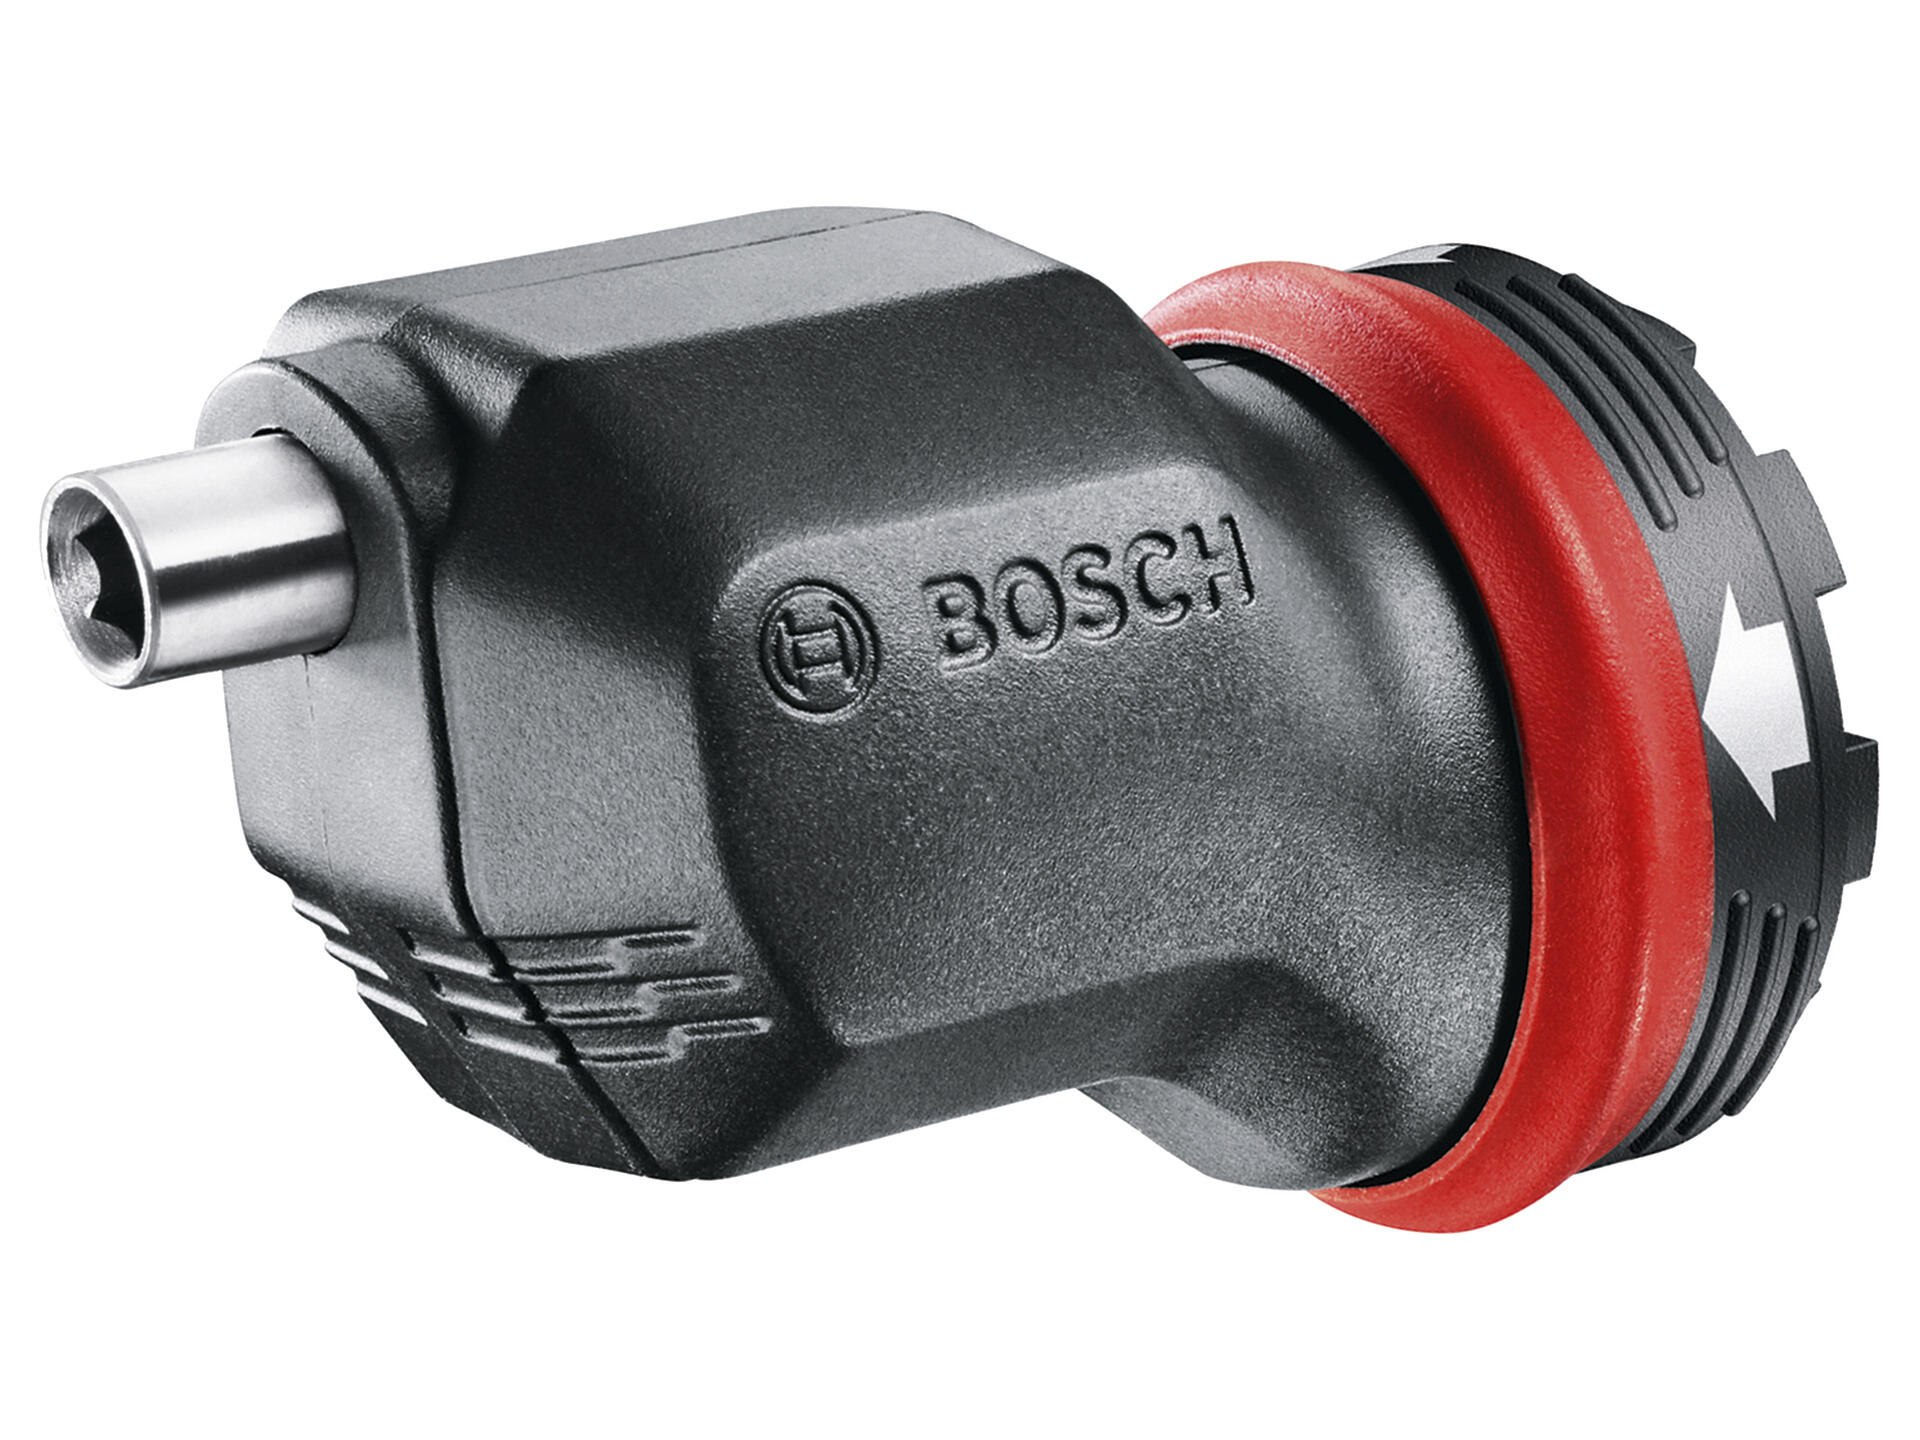 Bosch mandrin excentrique pour AdvancedImpact 18/AdvancedDrill 18